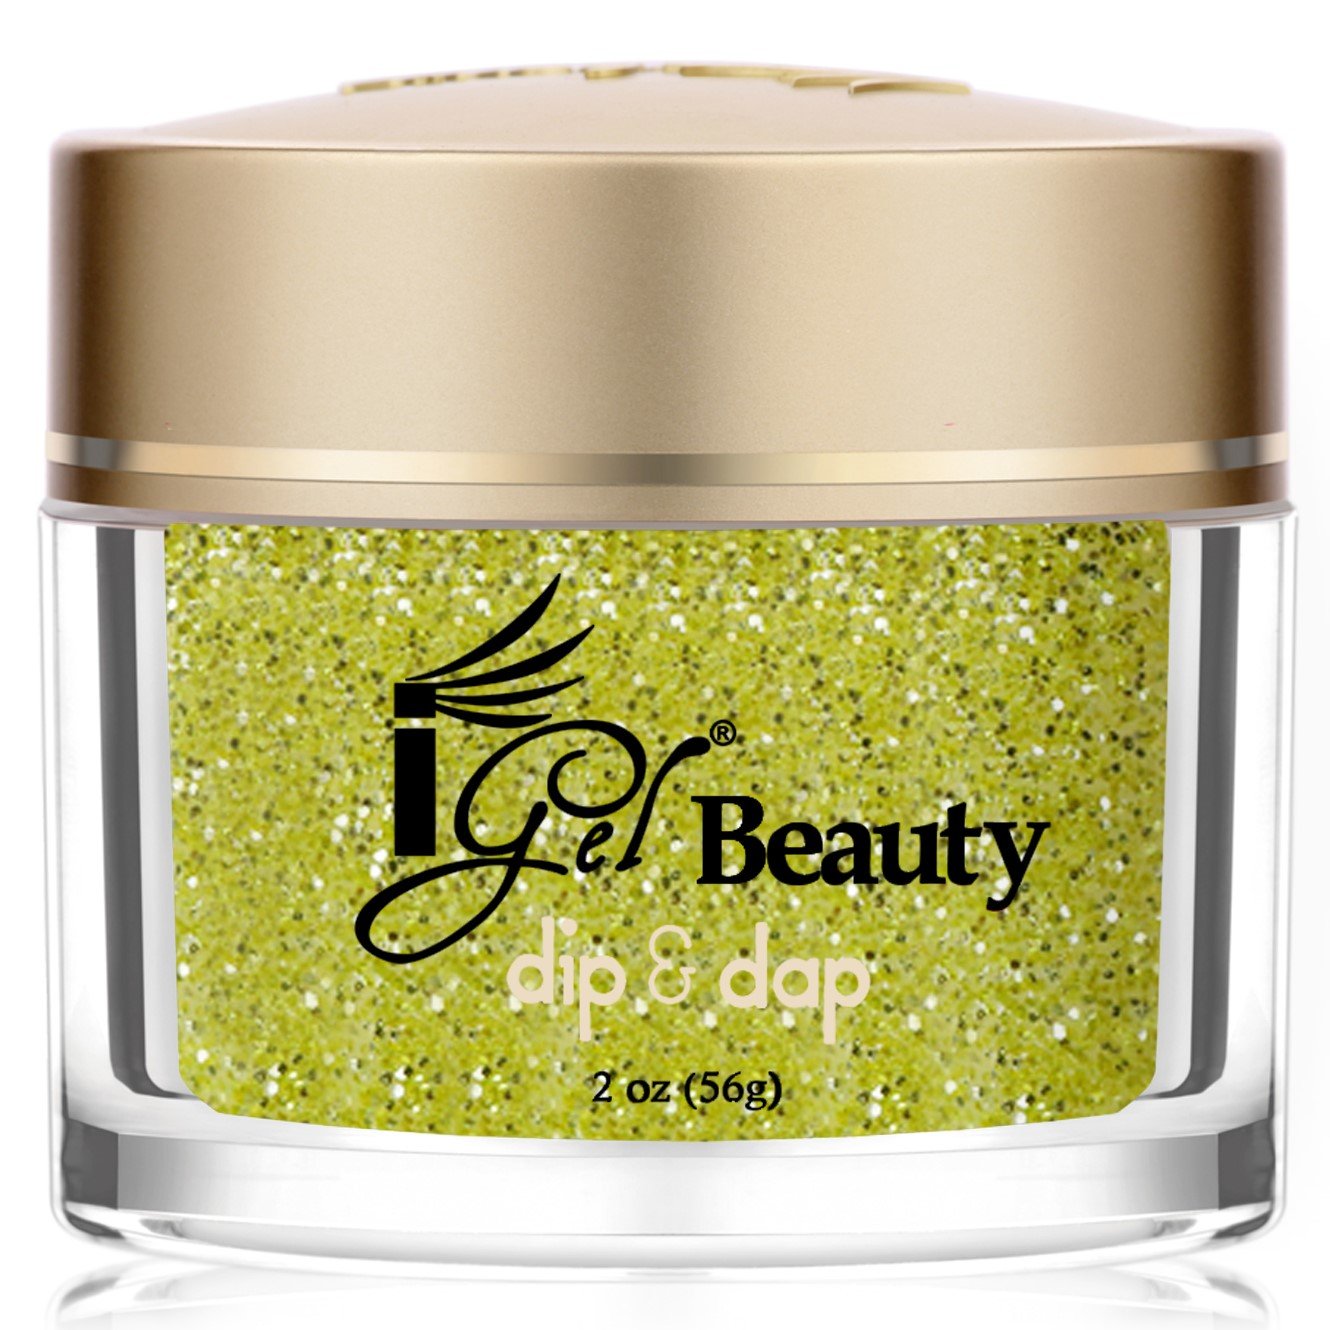 iGel Beauty - Dip & Dap Powder - DD151 Lemon Zest